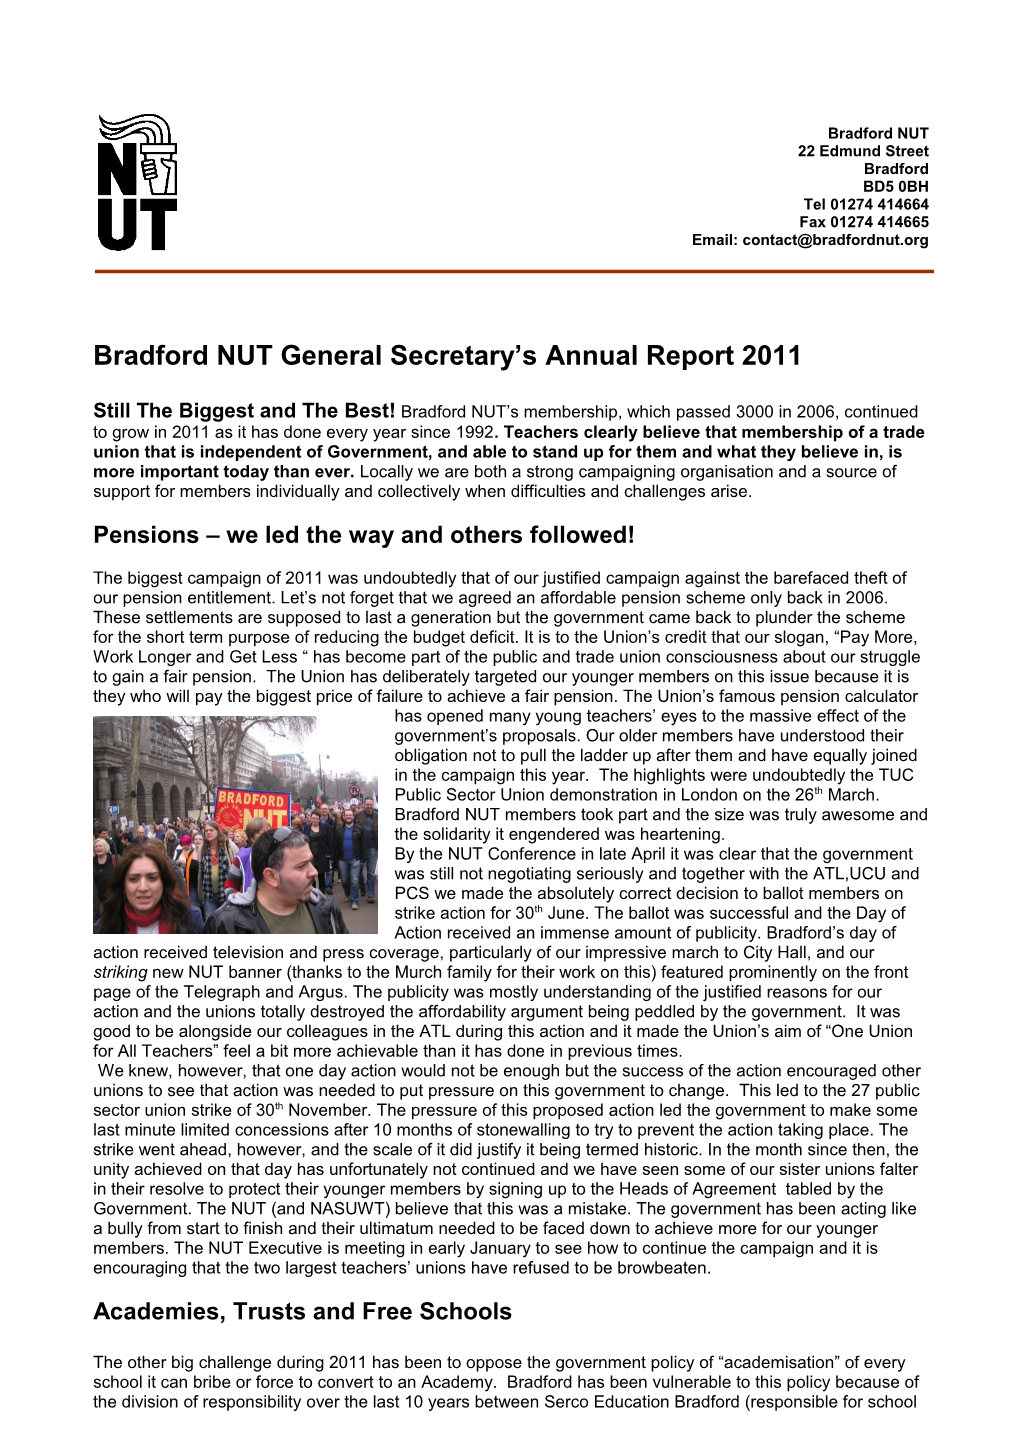 Bradford NUT General Secretary S Annual Report 2007